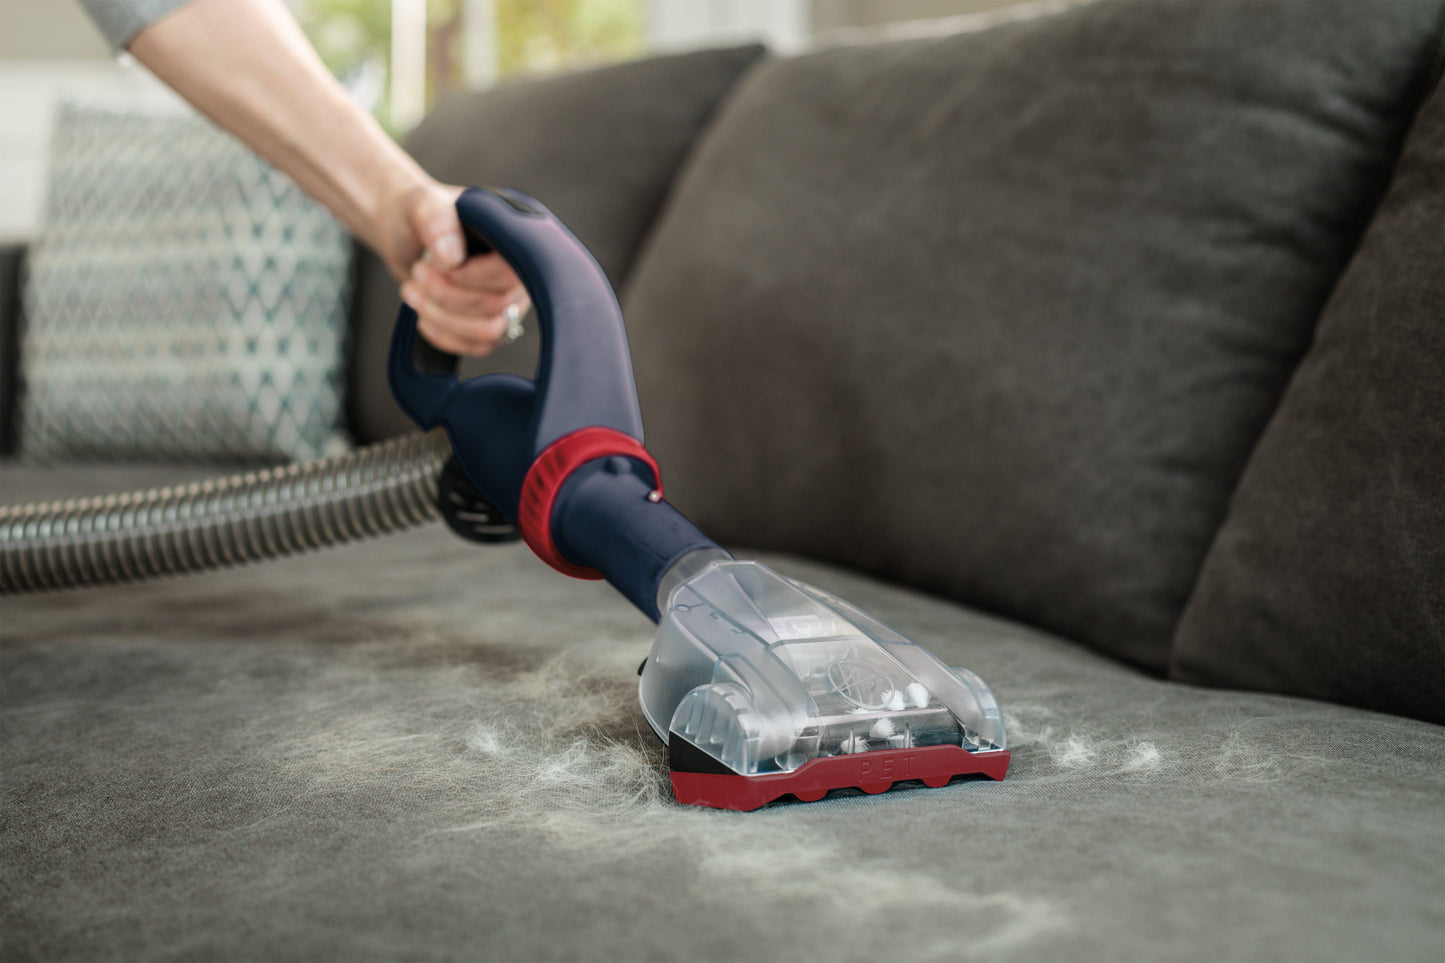 PowerDrive Pet Upright Vacuum